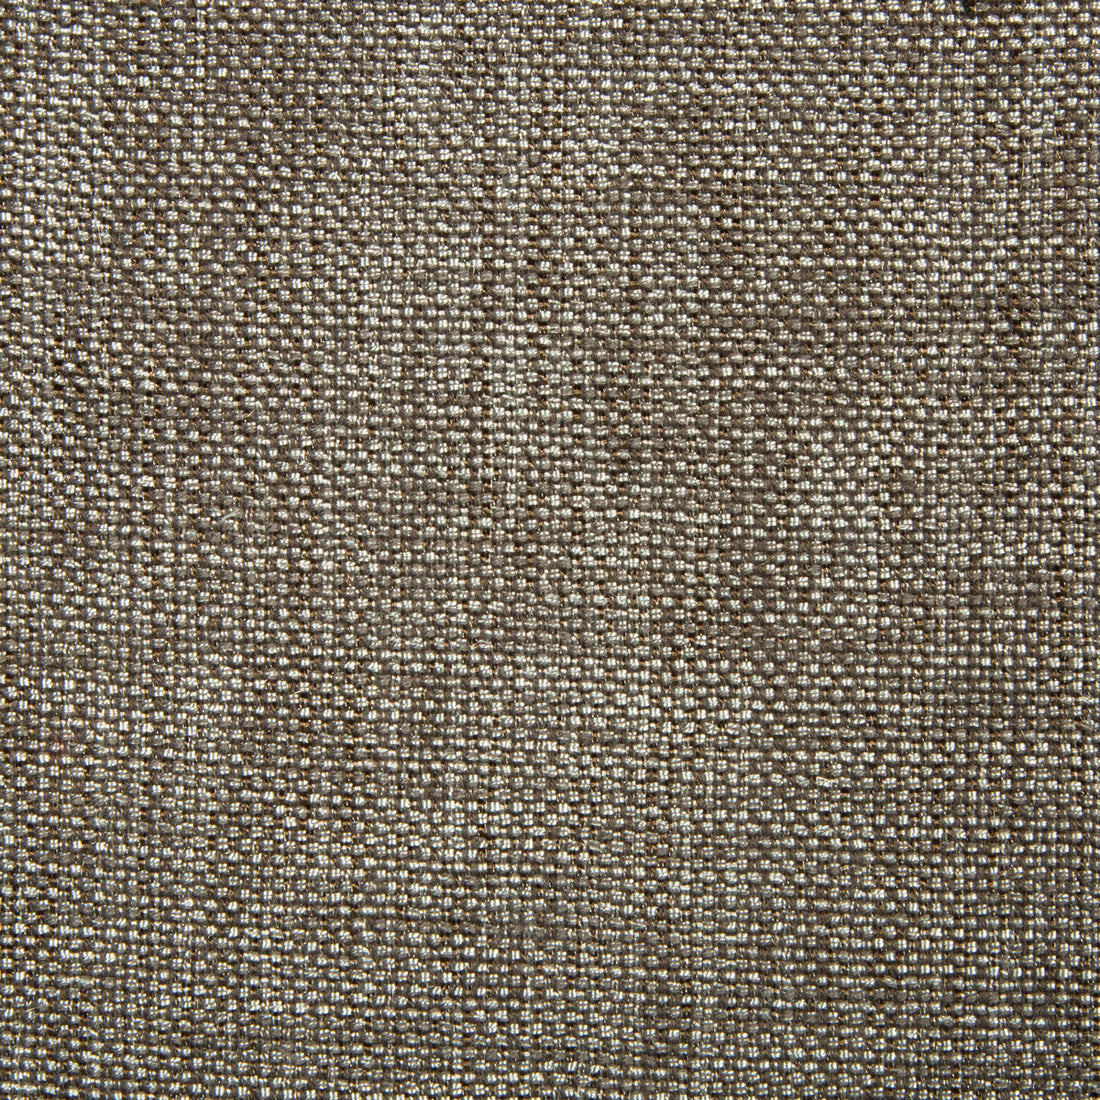 Kravet Smart fabric in 34939-52 color - pattern 34939.52.0 - by Kravet Smart